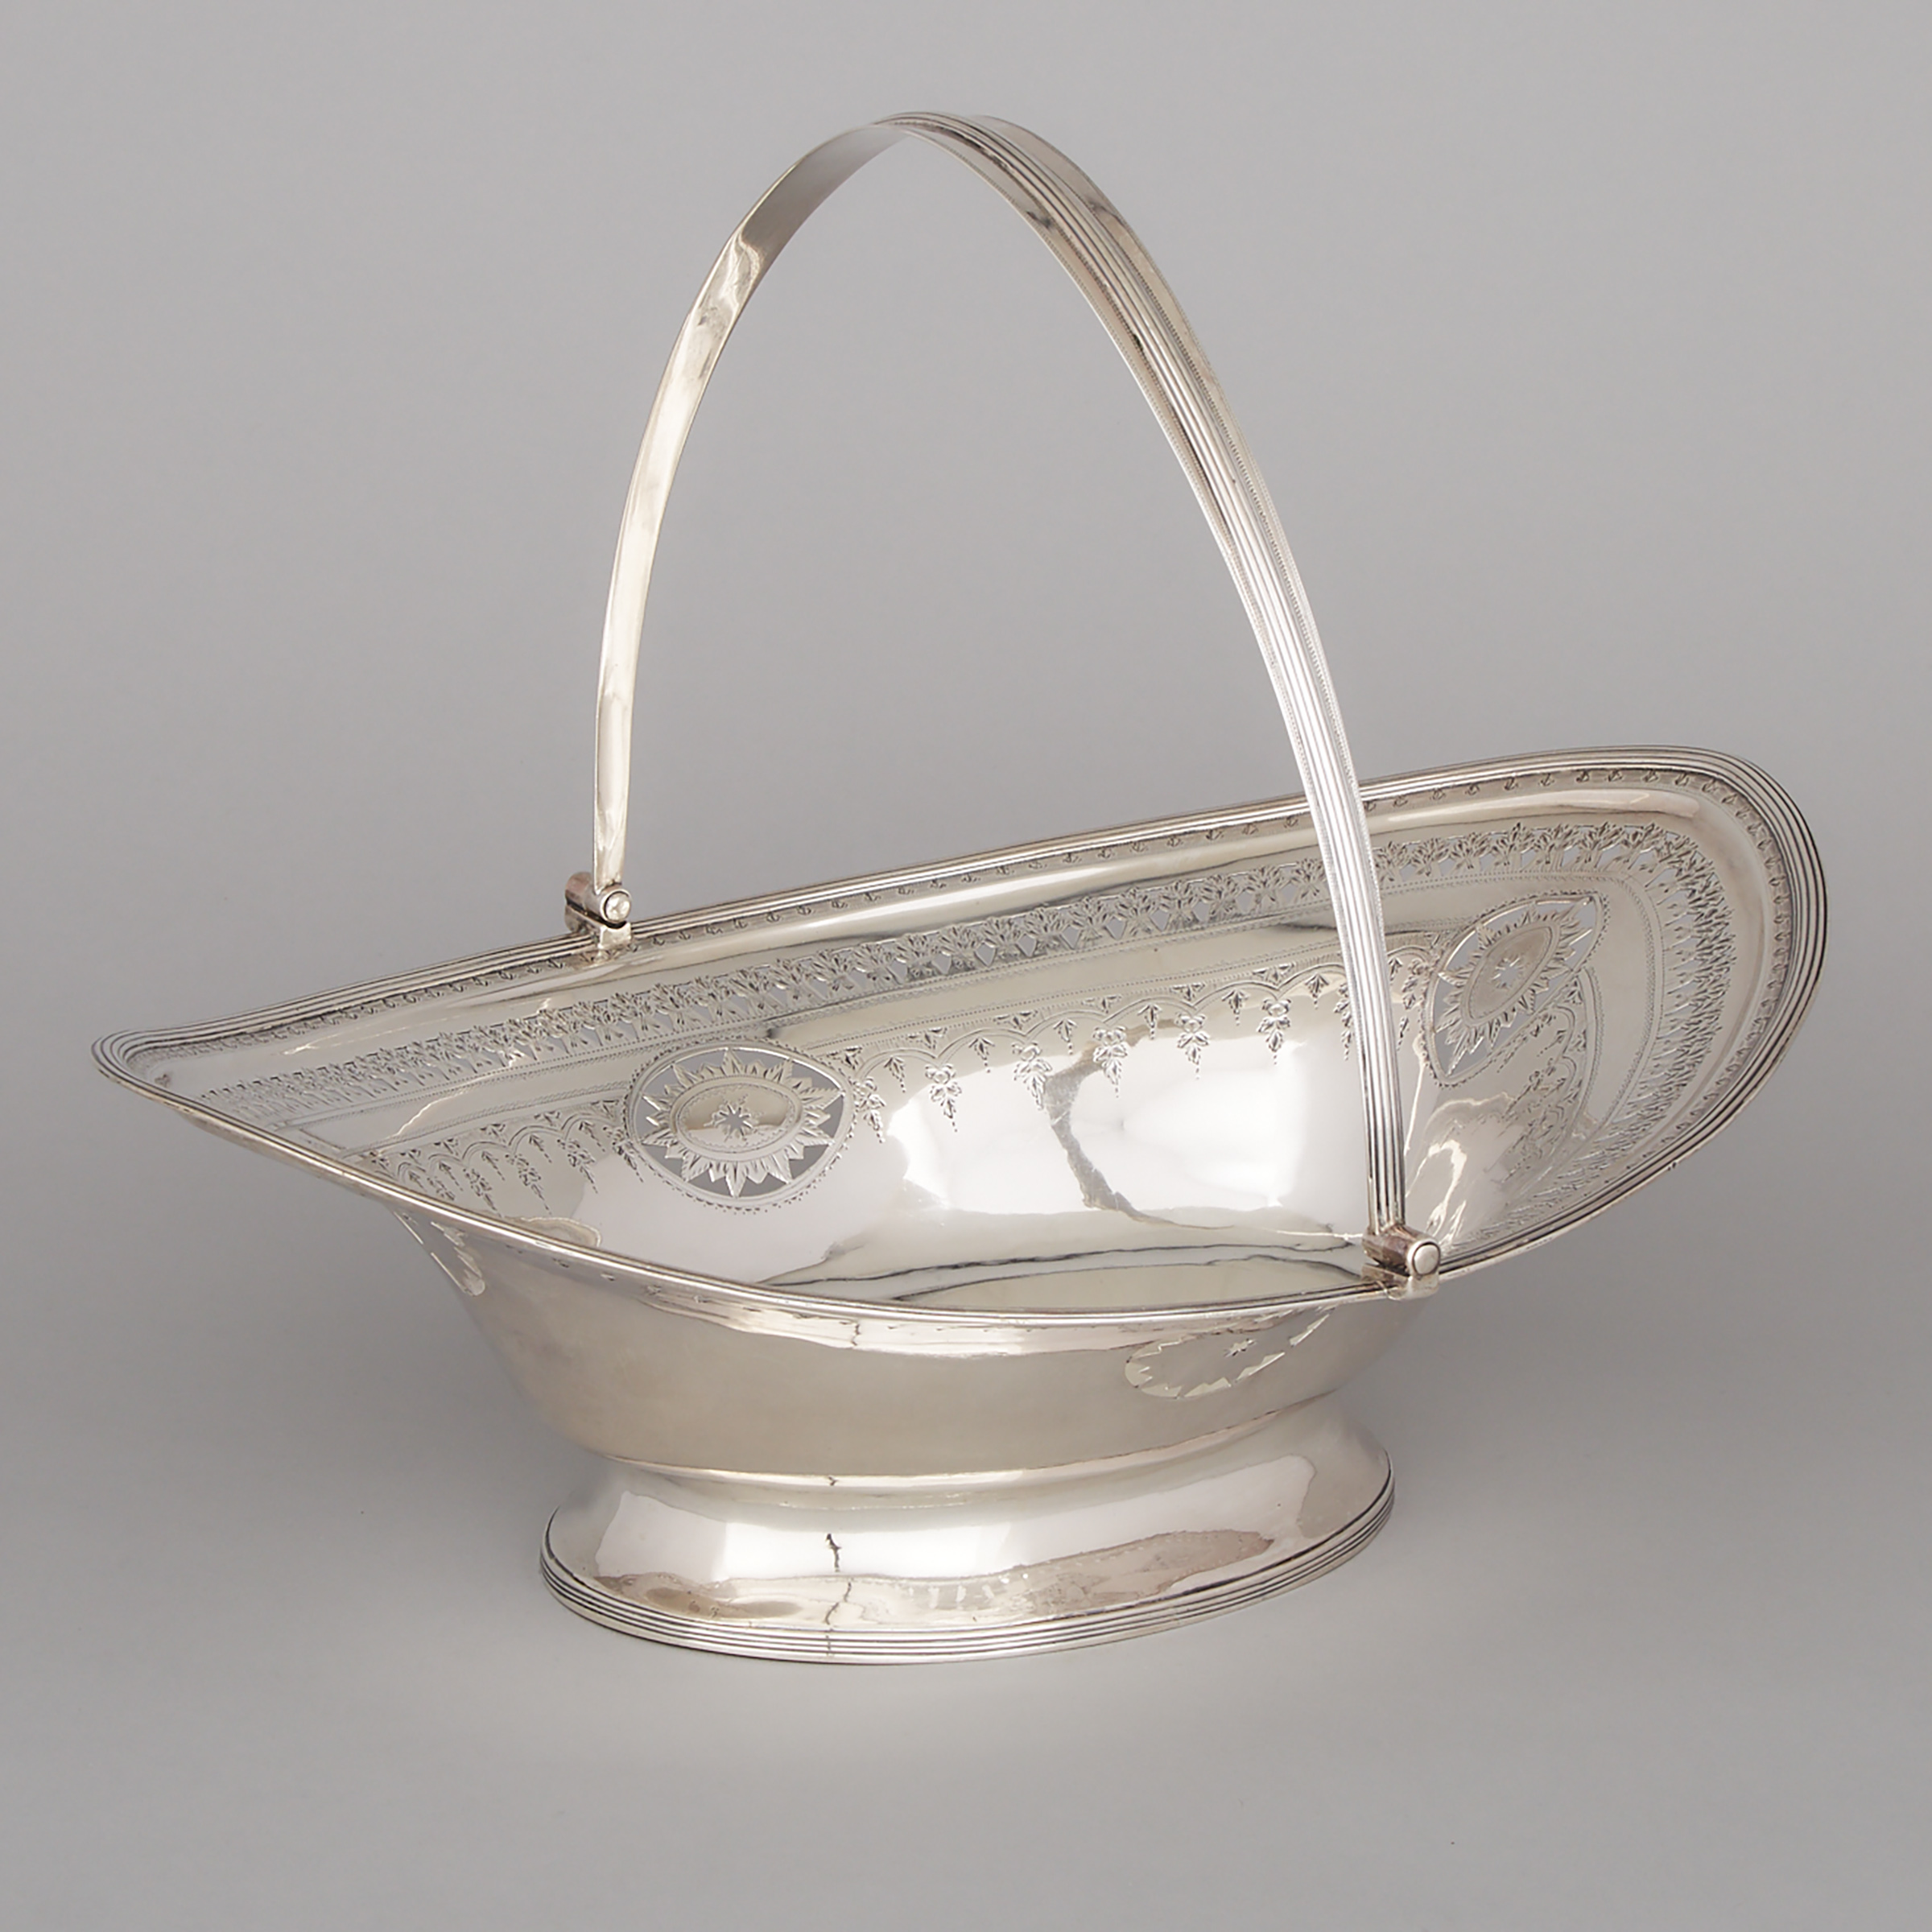 George III Silver Oval Cake Basket, Crespin Fuller, London, 1794